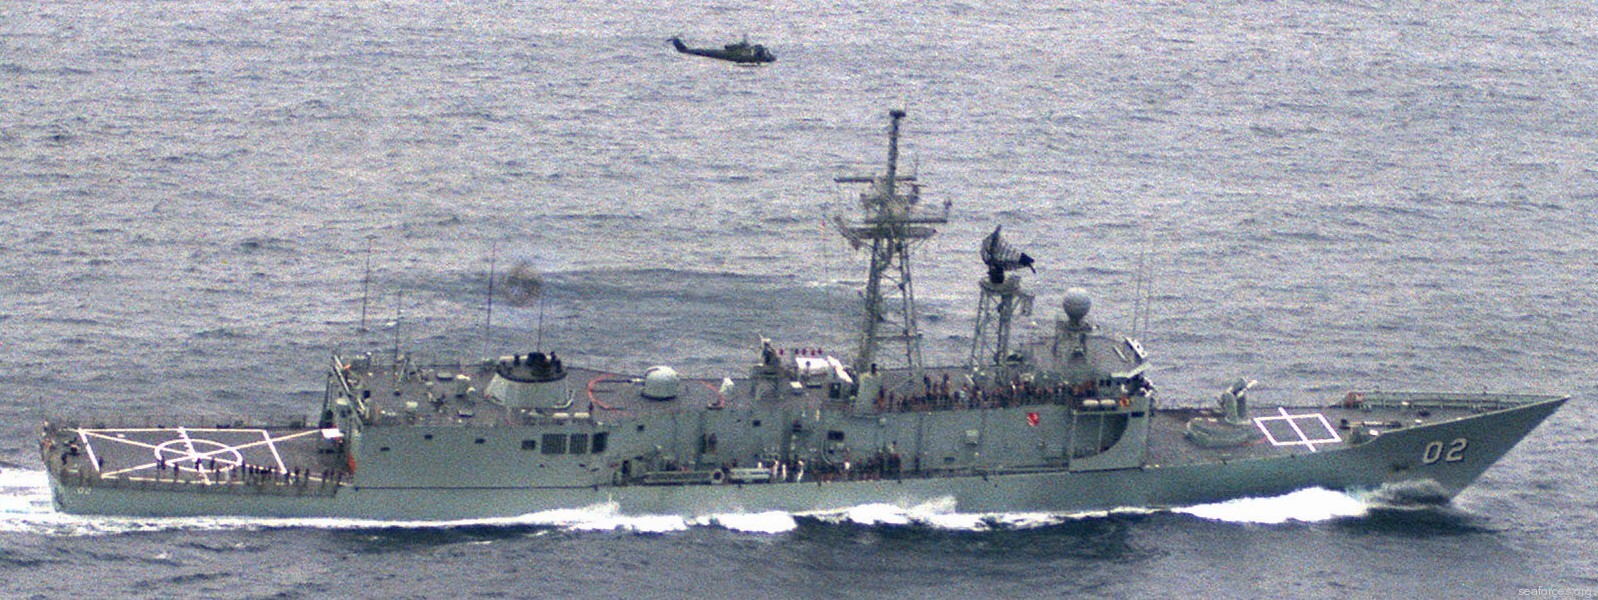 ffg-02 hmas canberra adelaide class frigate royal australian navy 1981 13